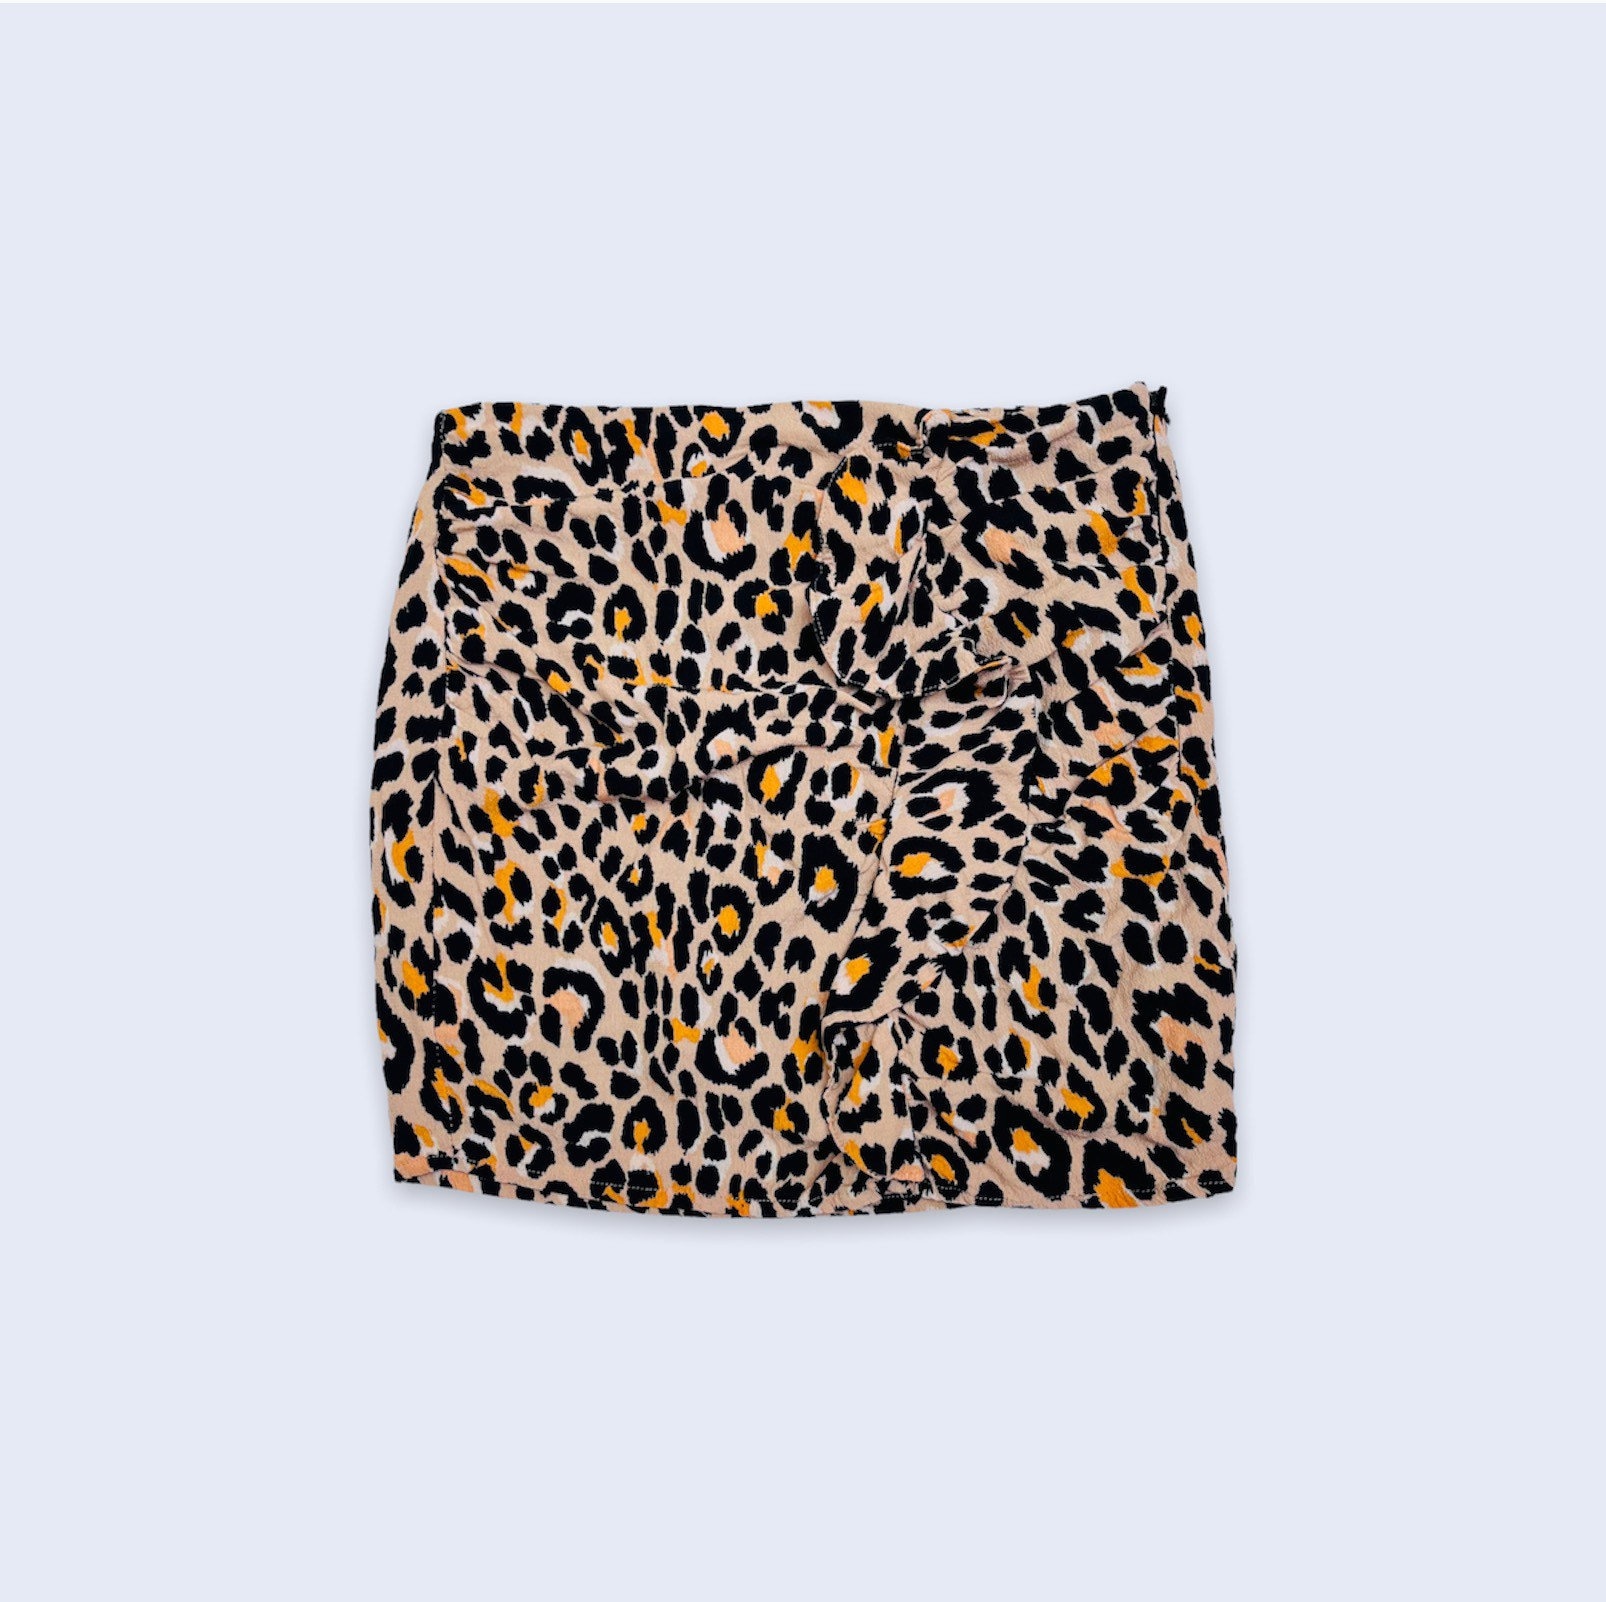 TOPSHOP neon yellow leopard print skirt 🐆 gorgeous... - Depop